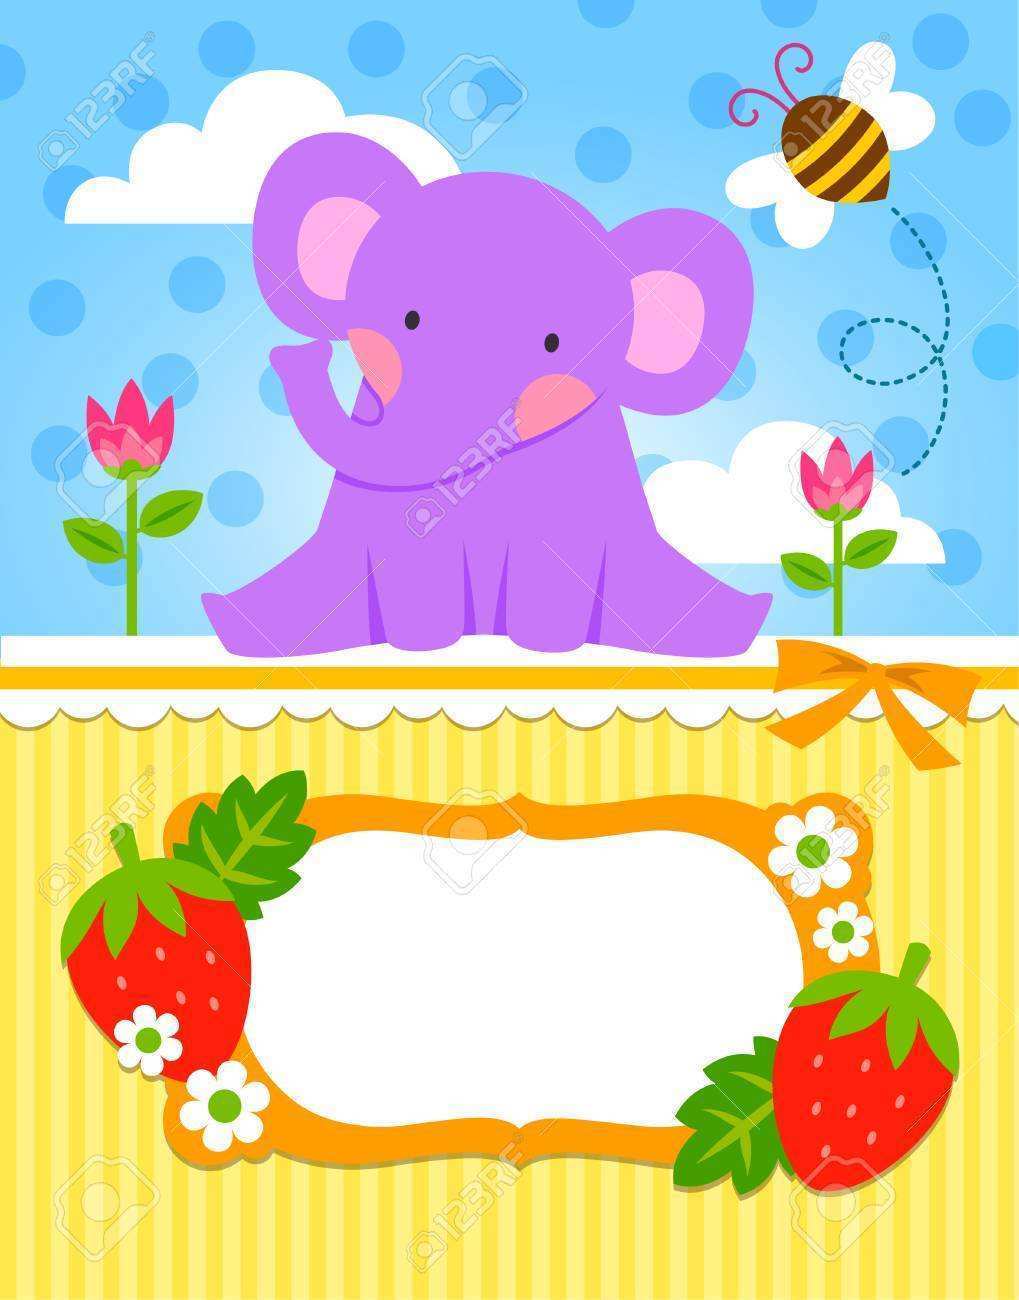 44 Visiting Elephant Birthday Card Template PSD File for Elephant Birthday Card Template